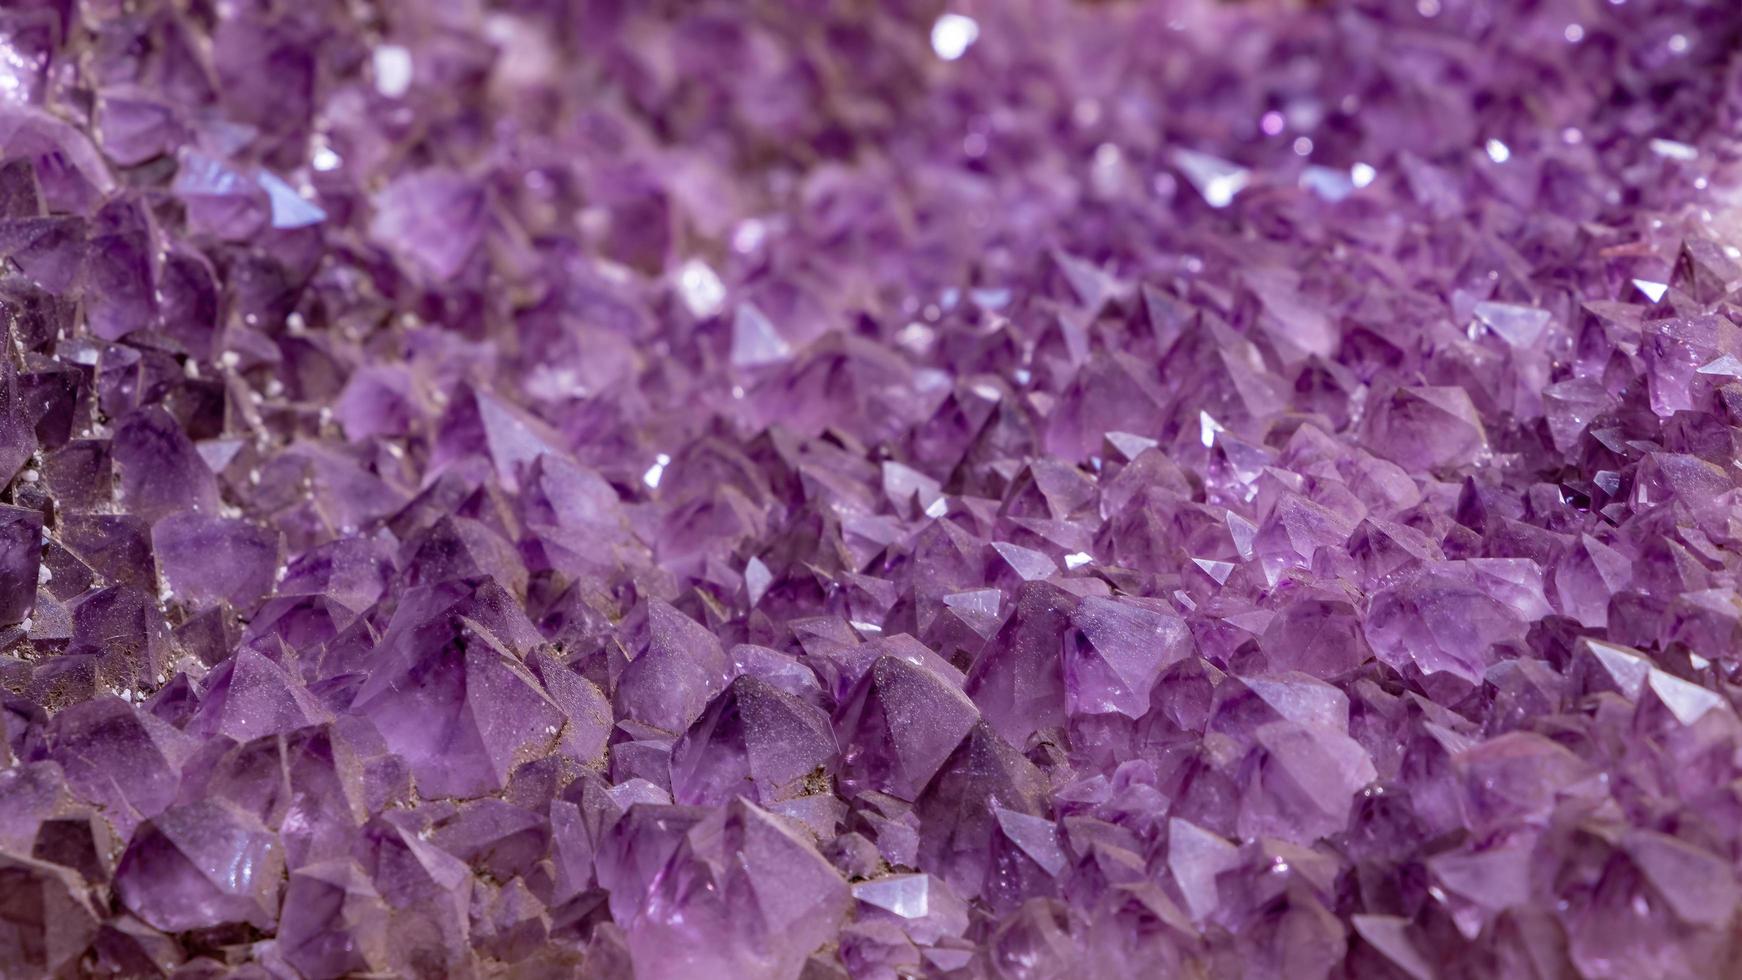 Goiania, Goias, Brazil, 2019 - Large block of purple crystals photo